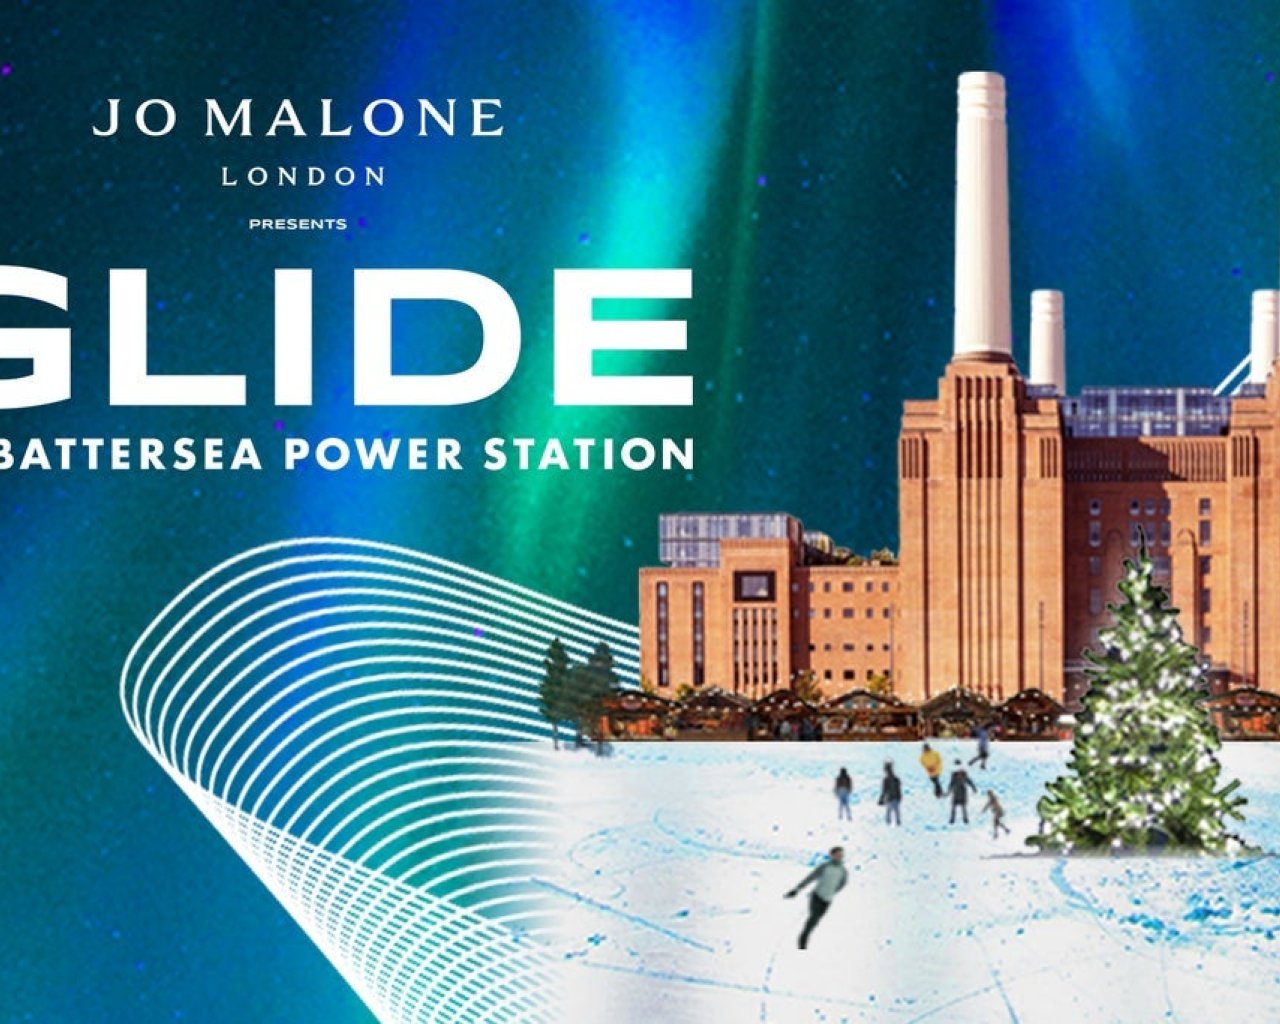 Jo Malone London presents Glide at Battersea Power Station